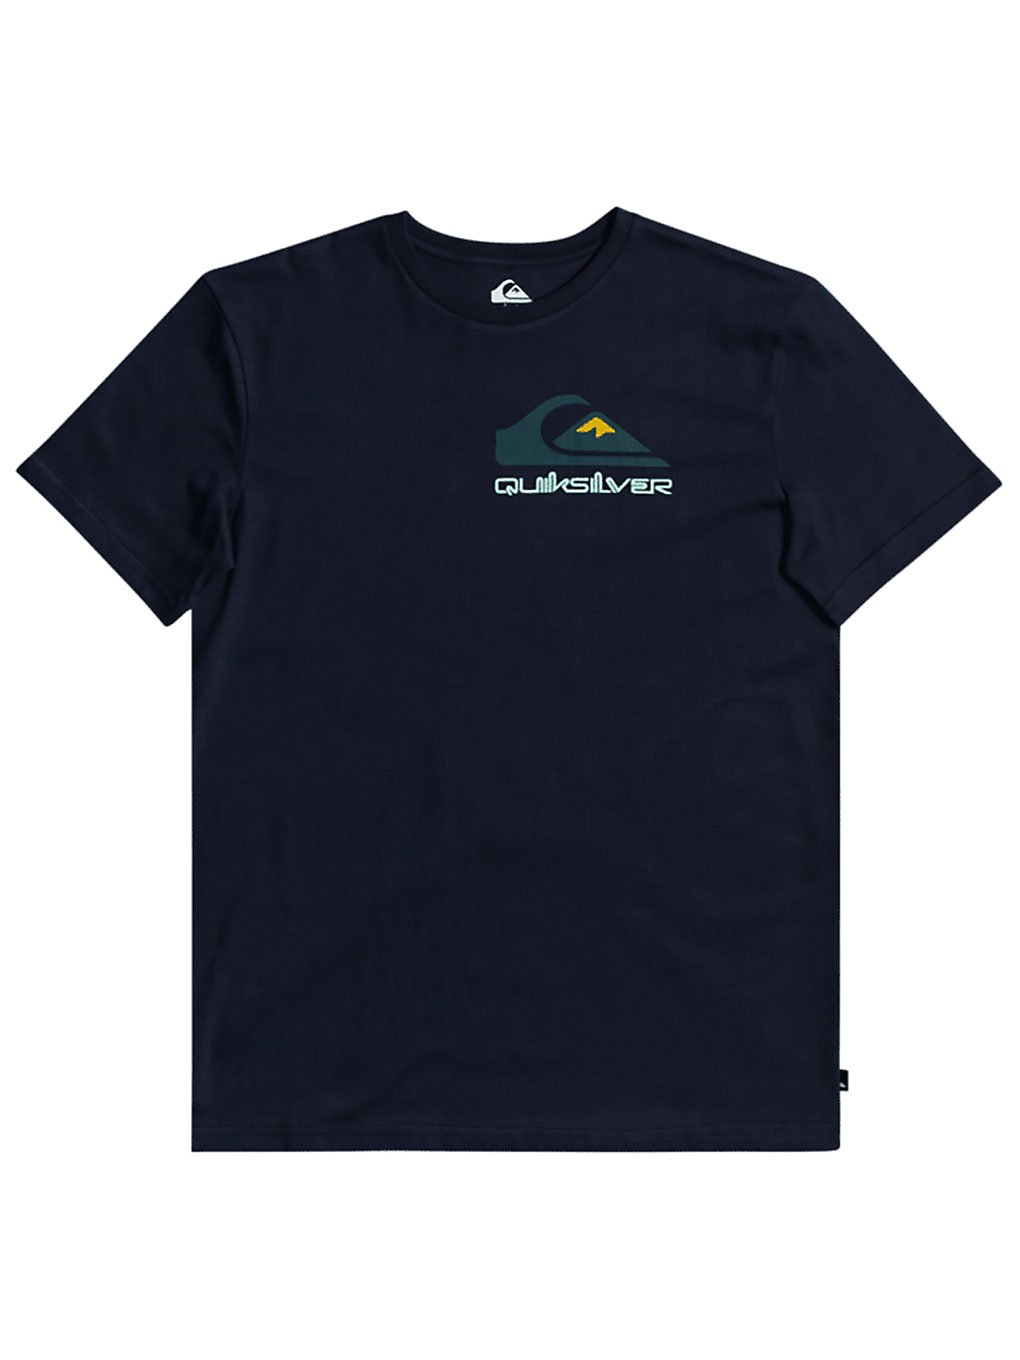 Quiksilver Reflect T-Shirt navy blazer